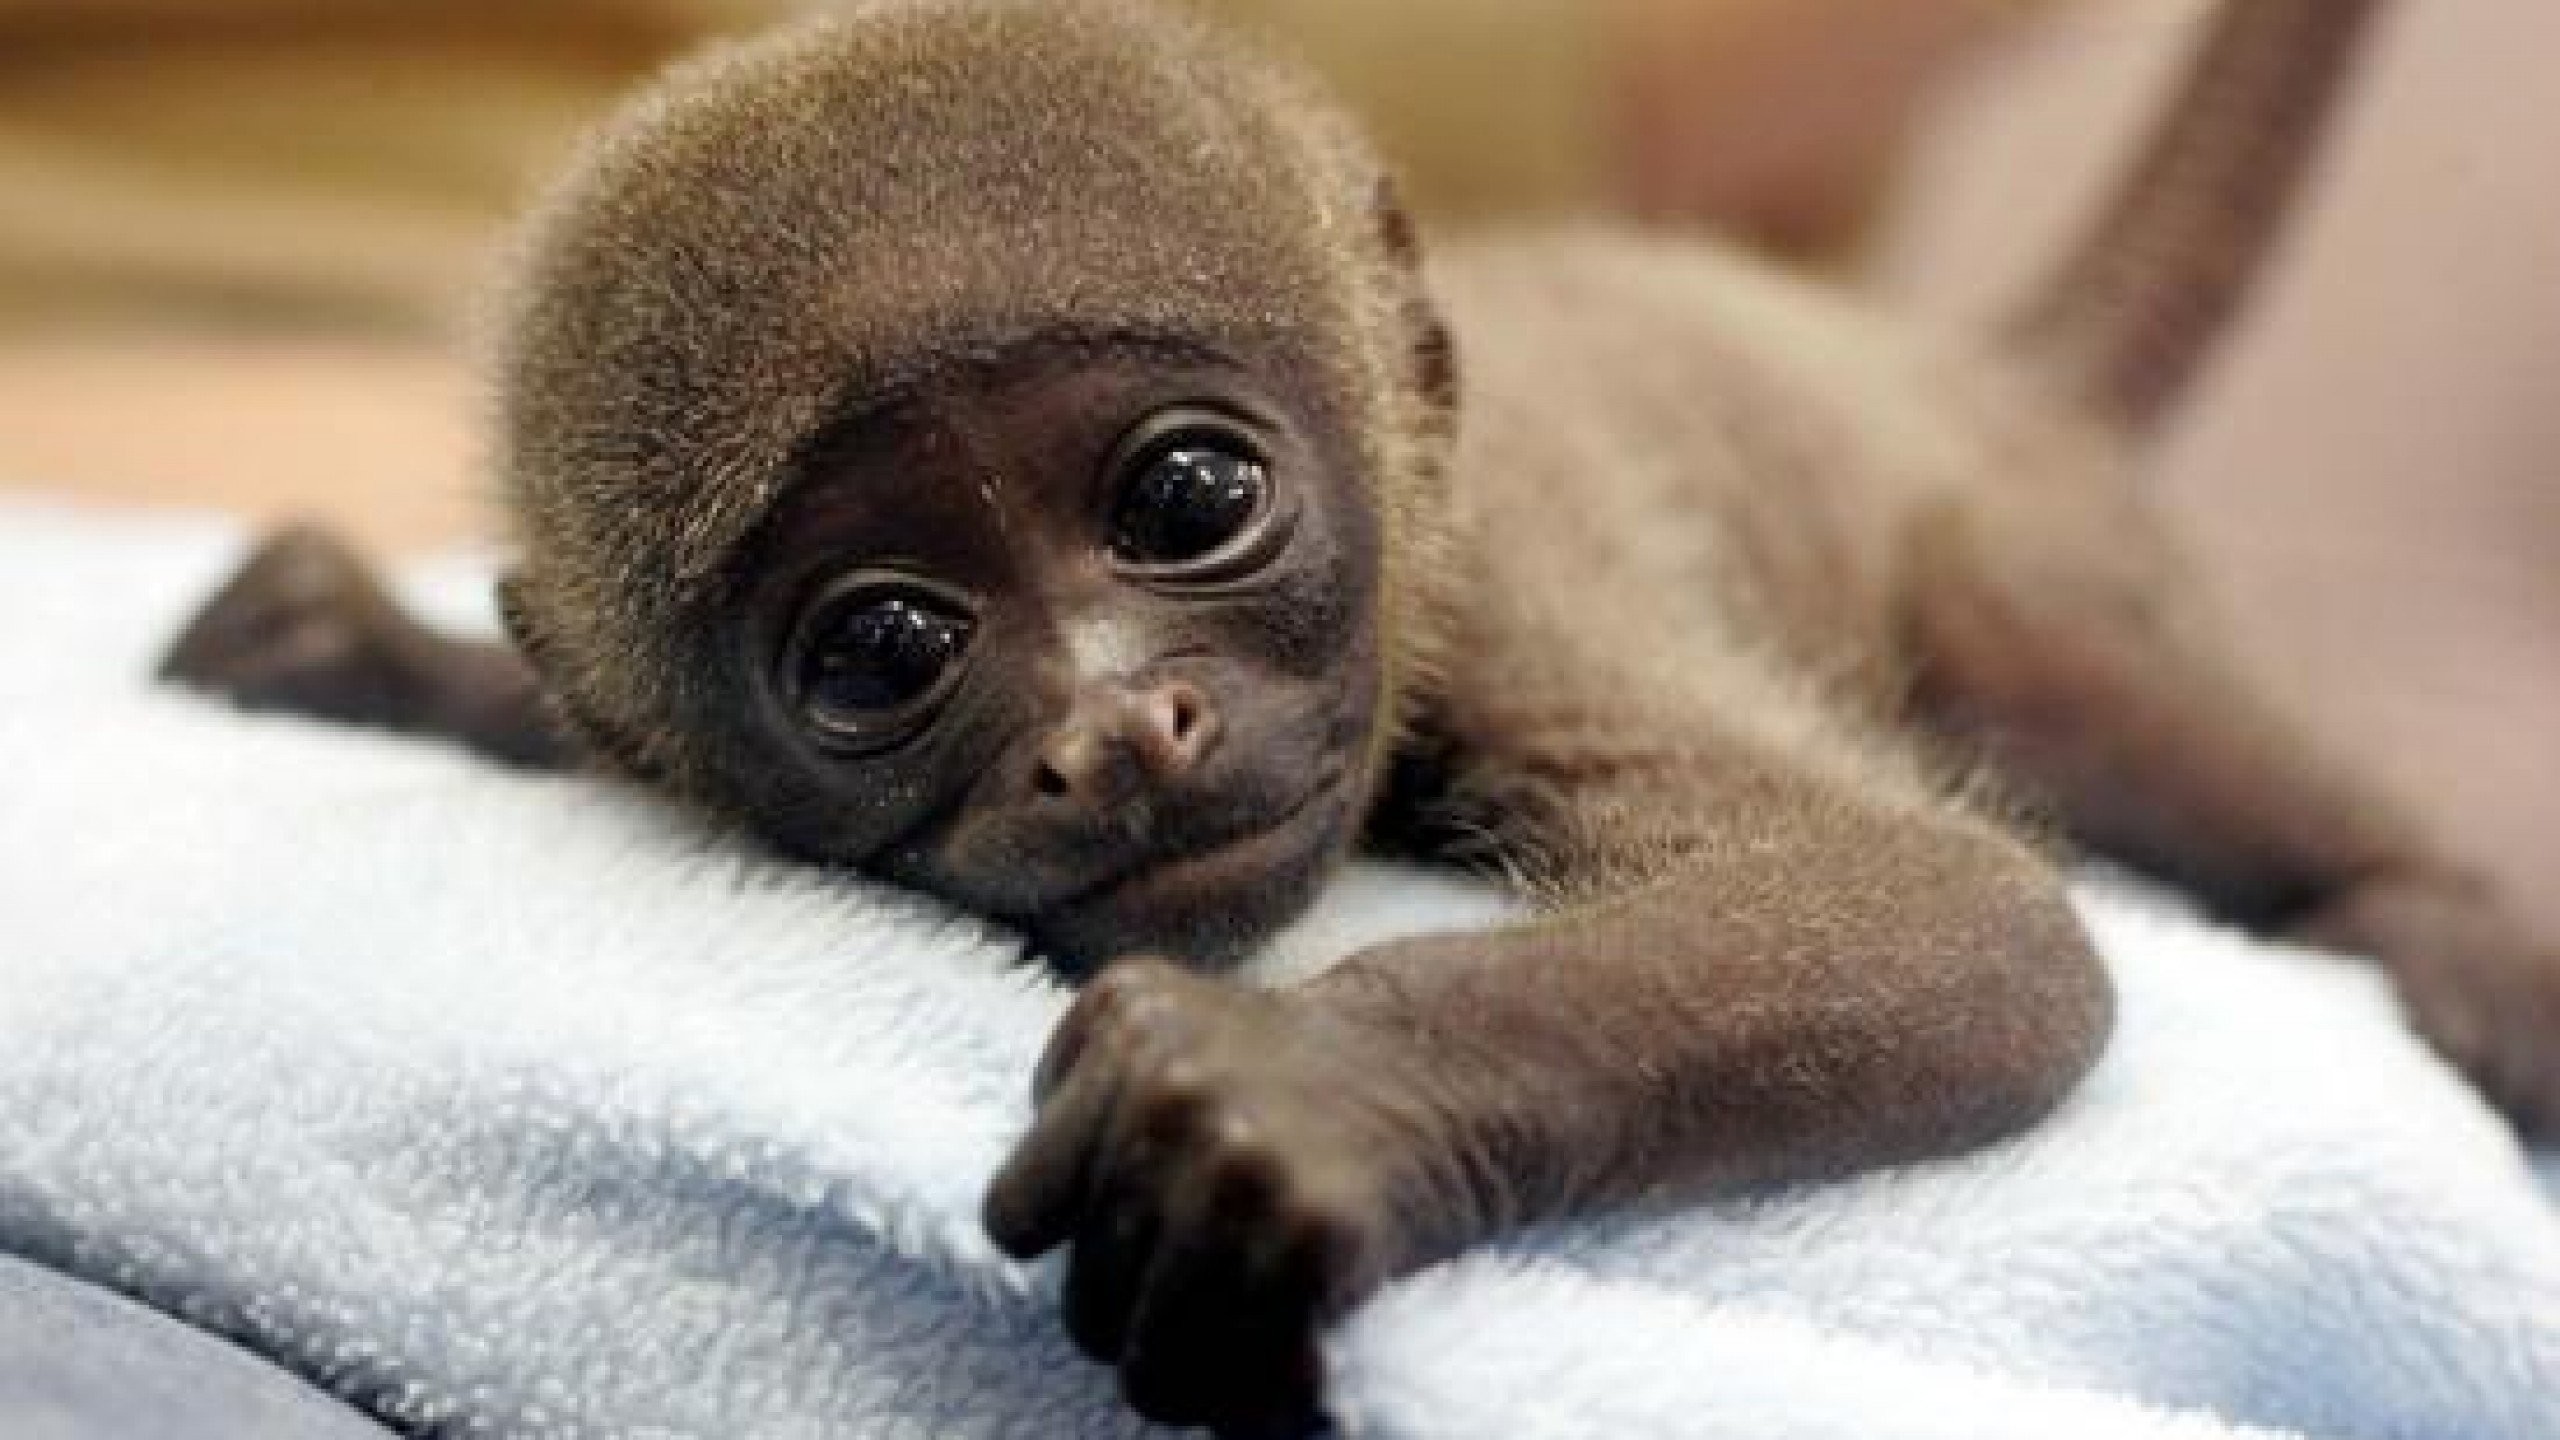 2560x1440 Cute Baby Monkey